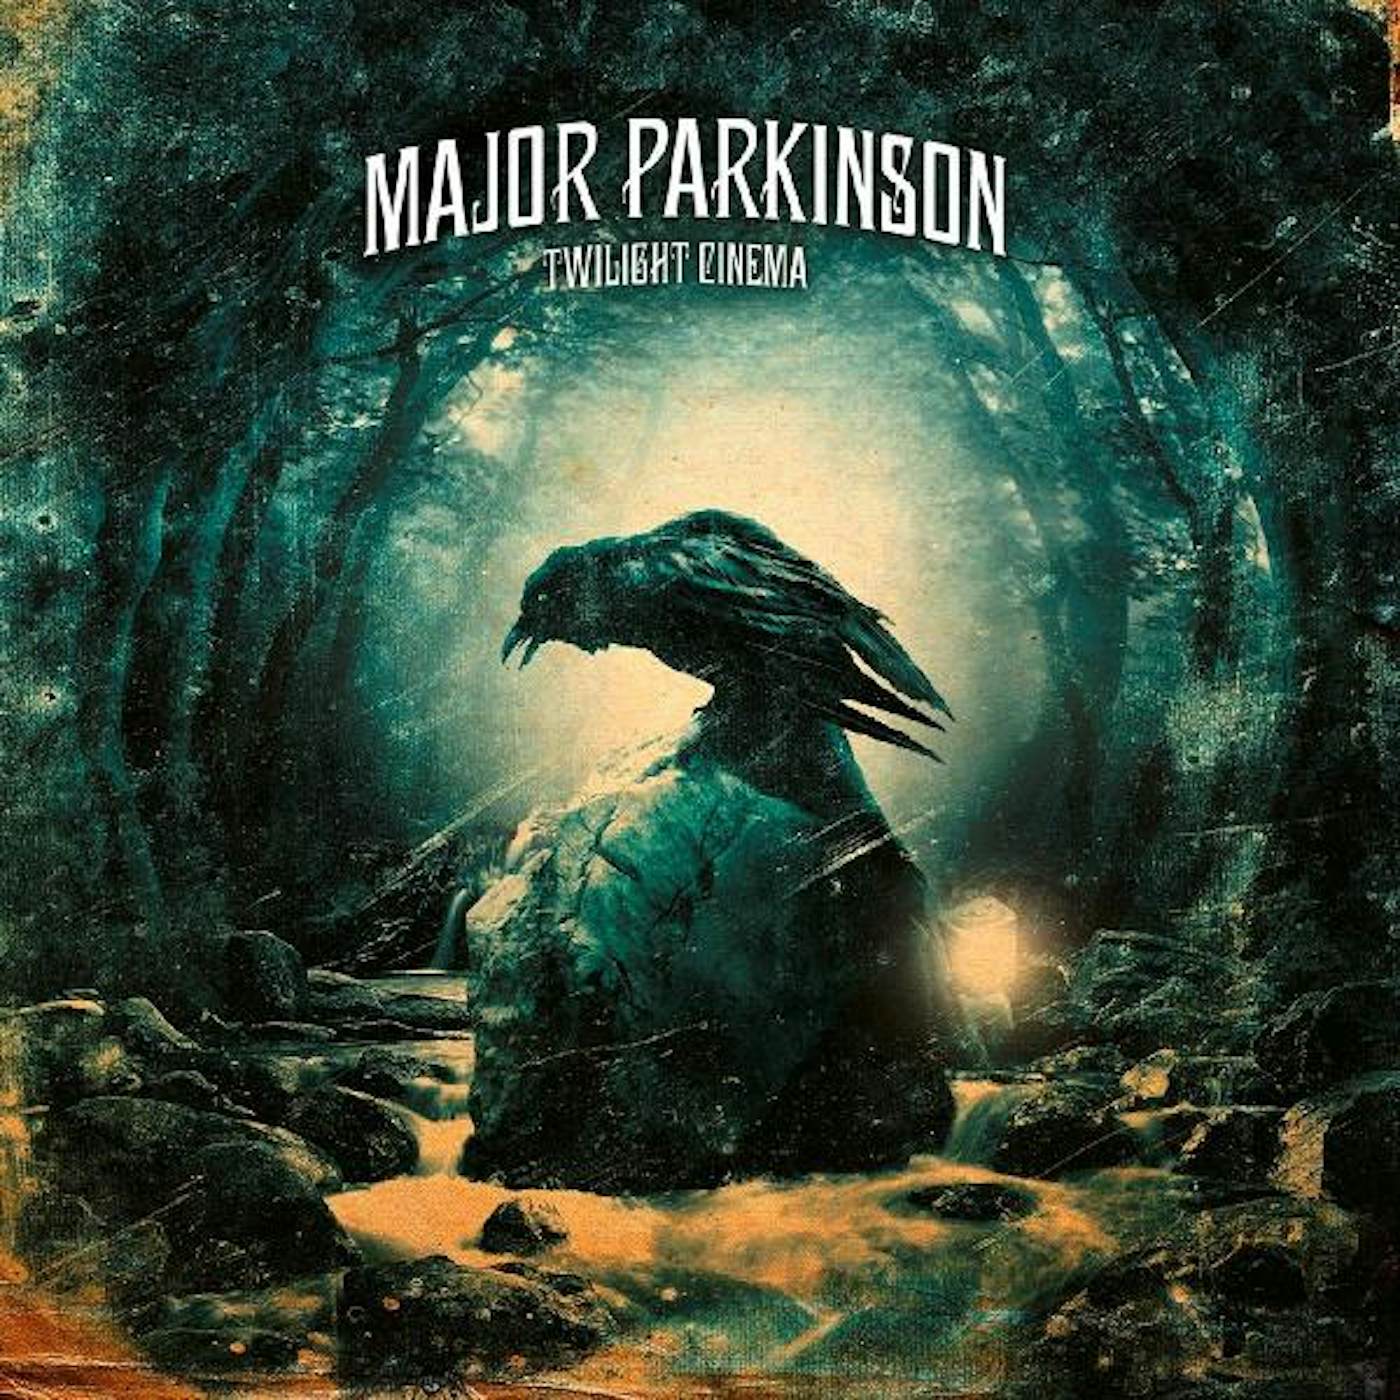 Major Parkinson Twilight Cinema Vinyl Record